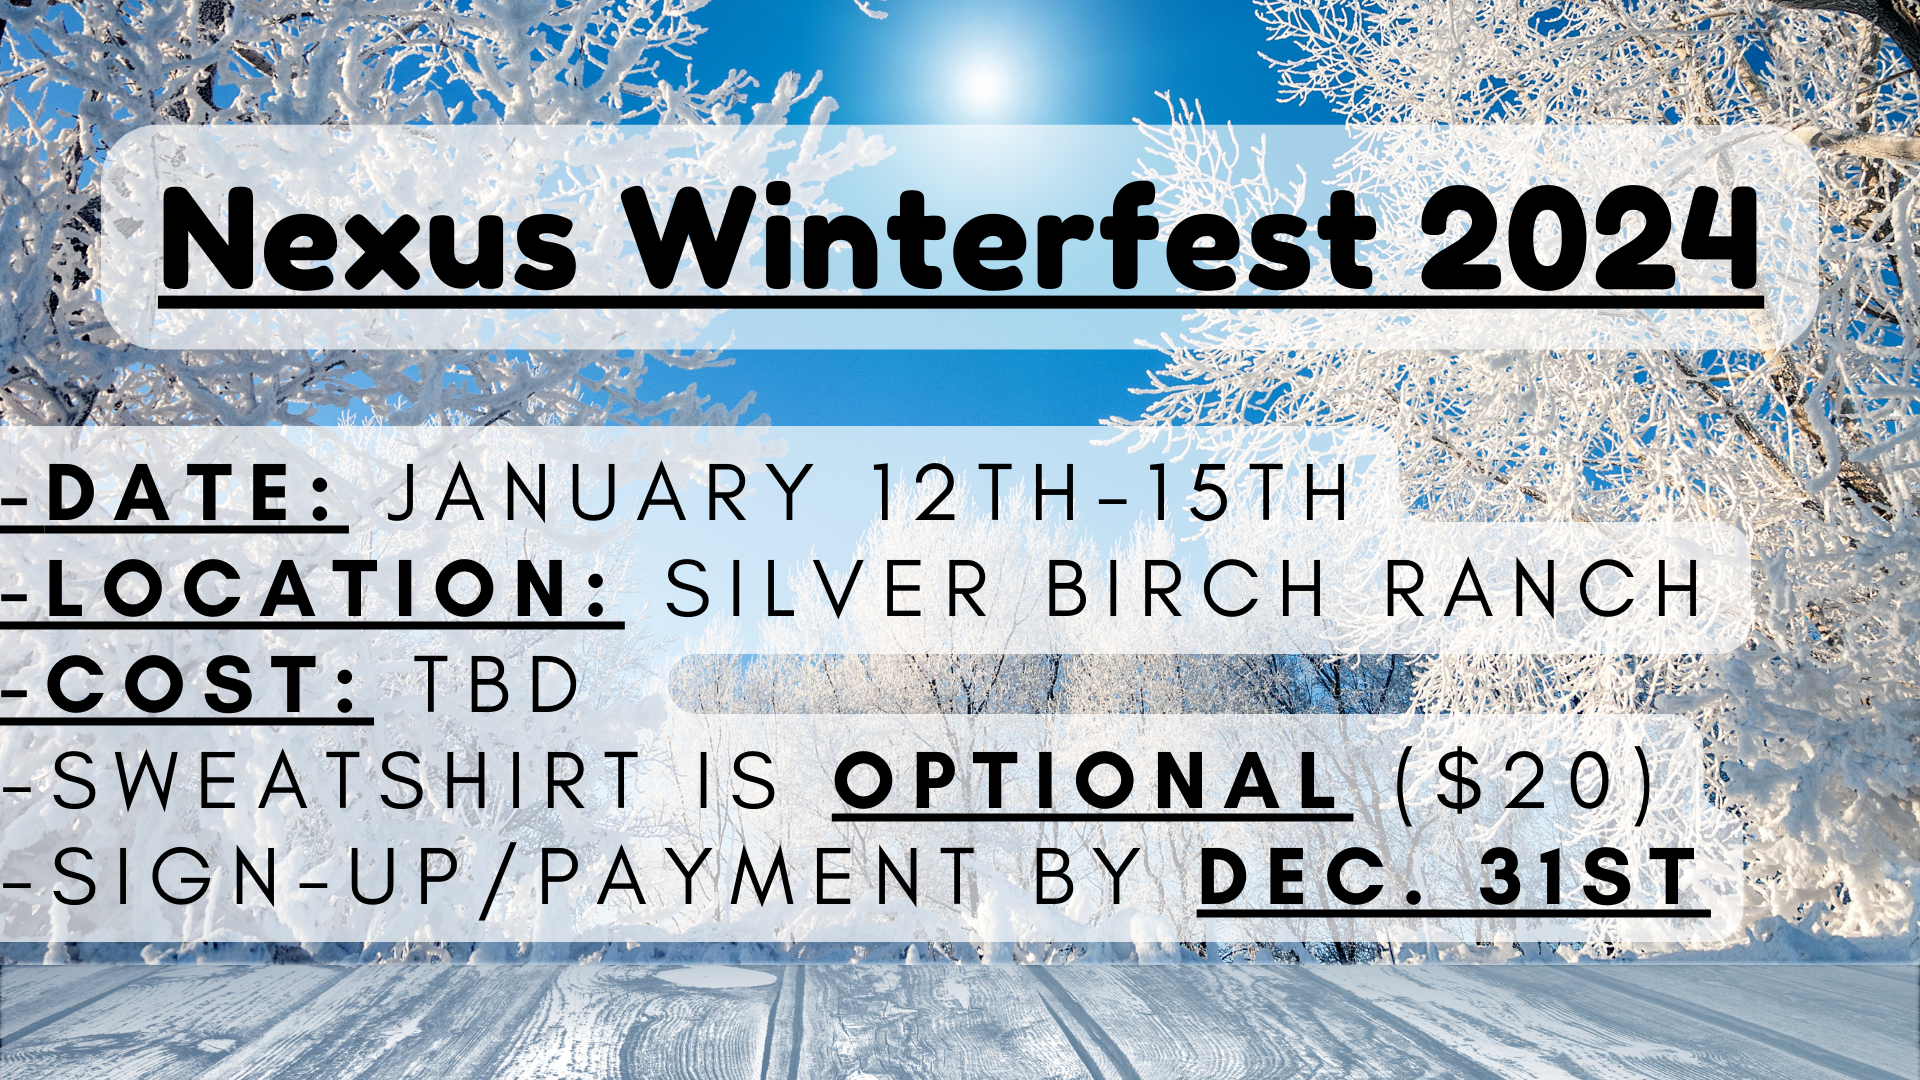 Nexus Winterfest 2024